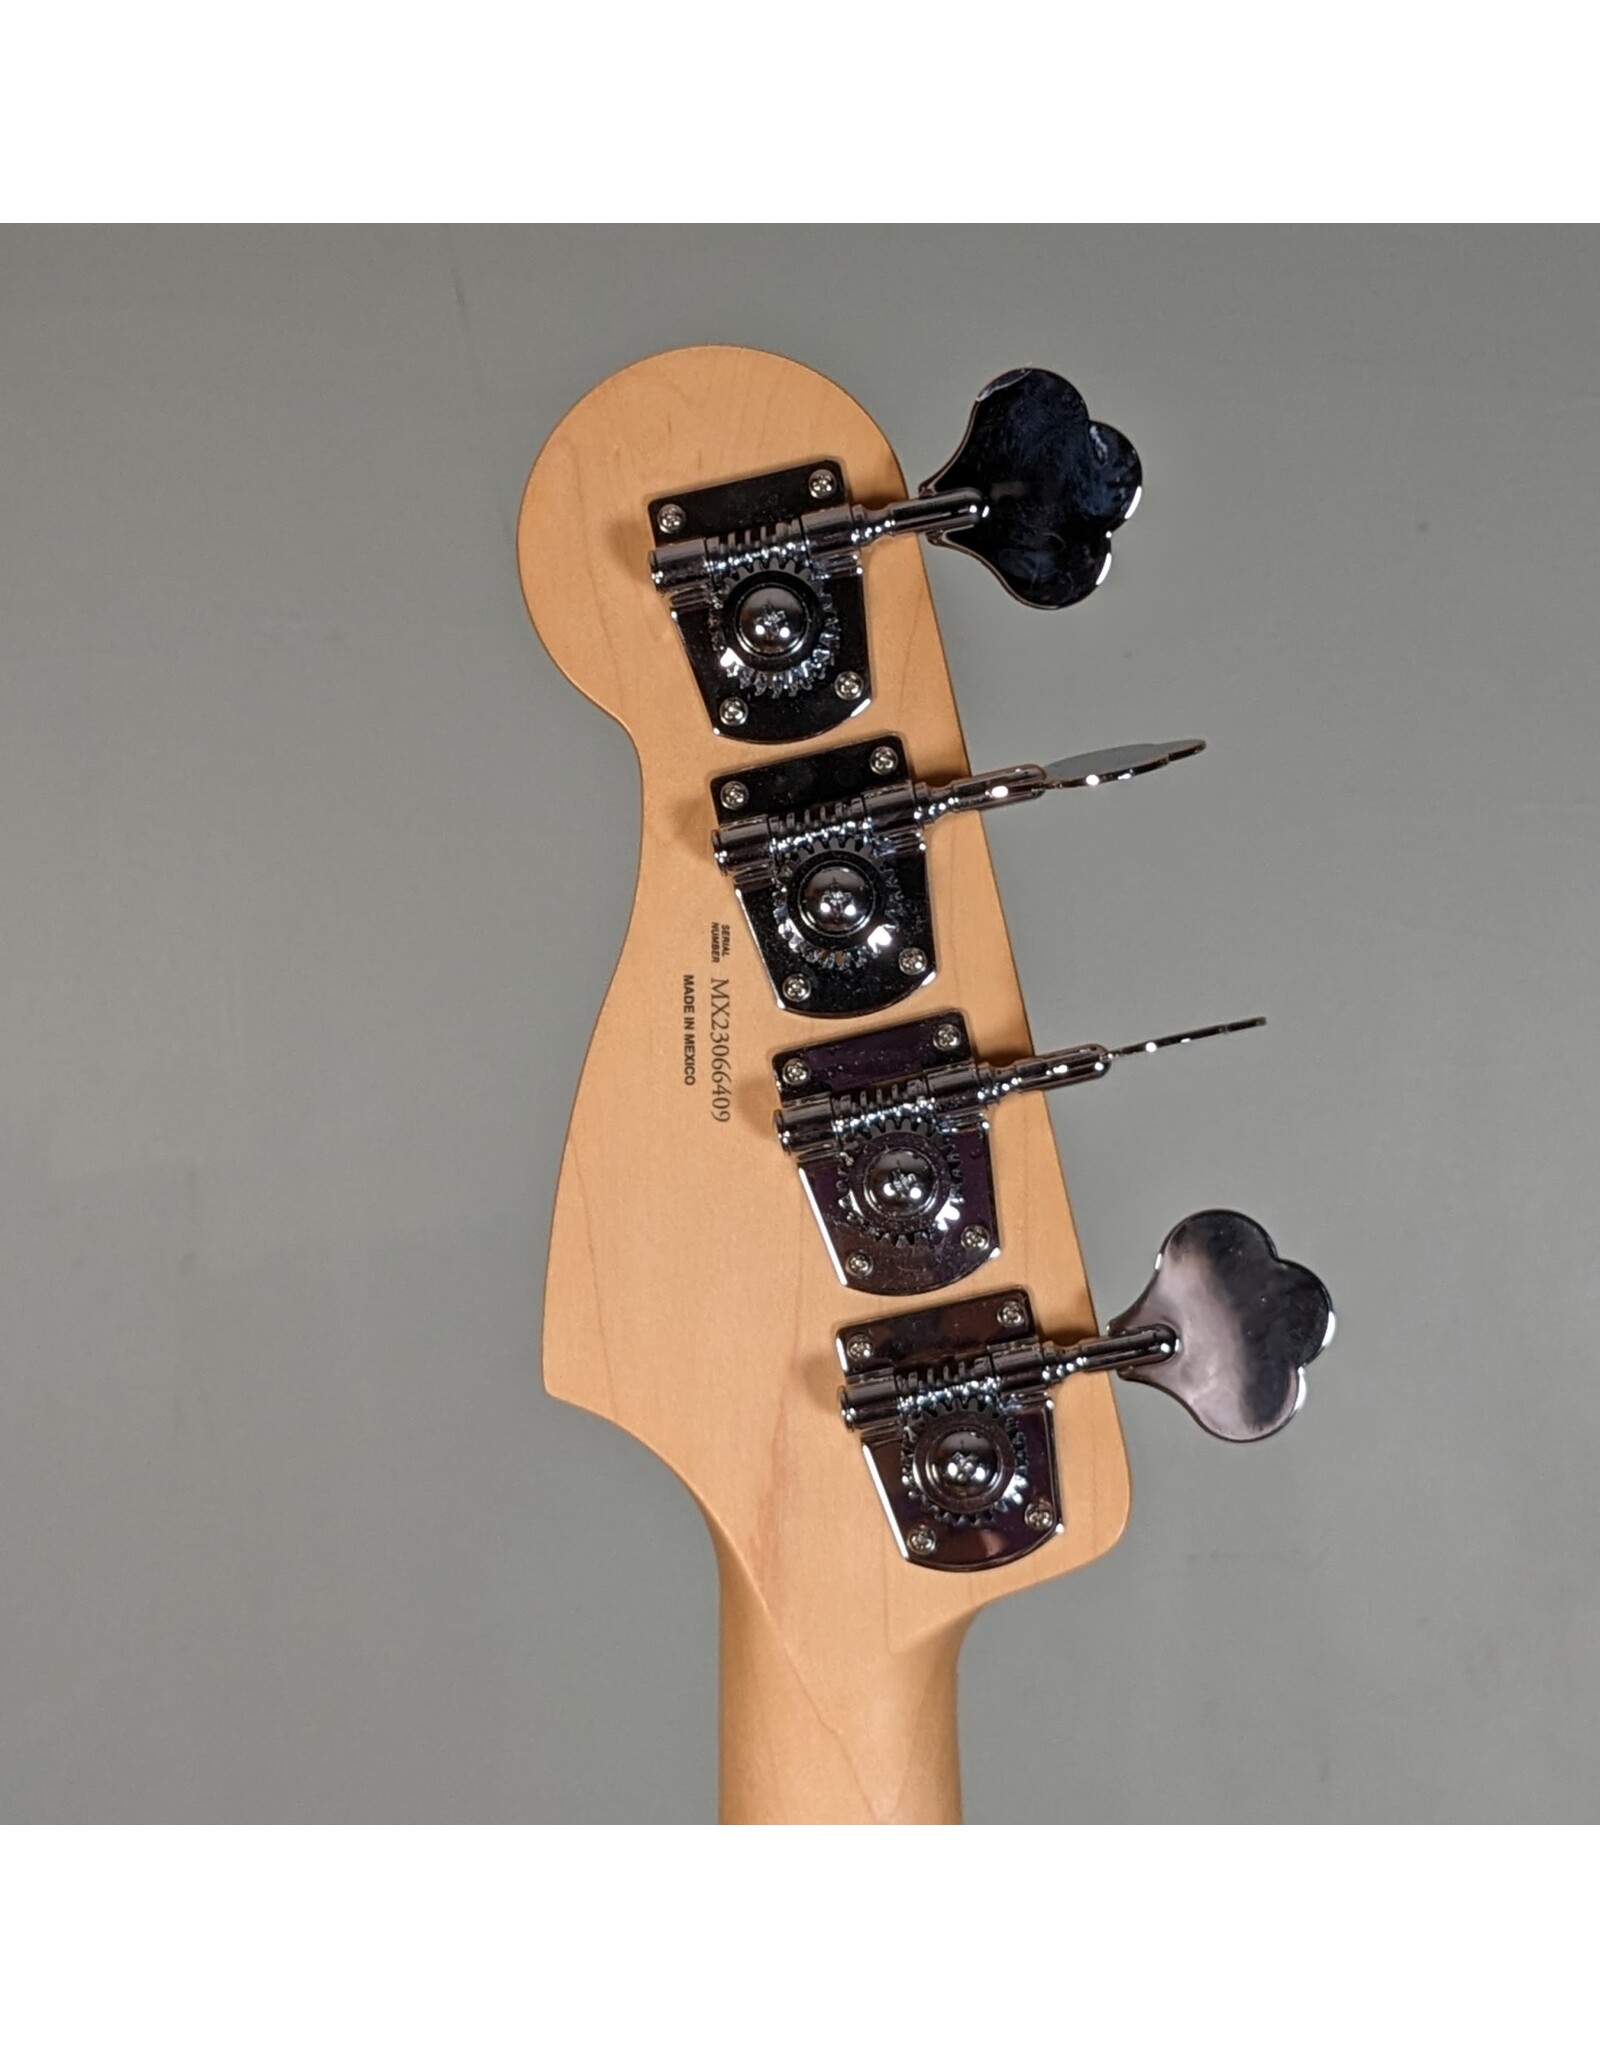 Fender Fender Player Precision Bass, Sea Foam Green